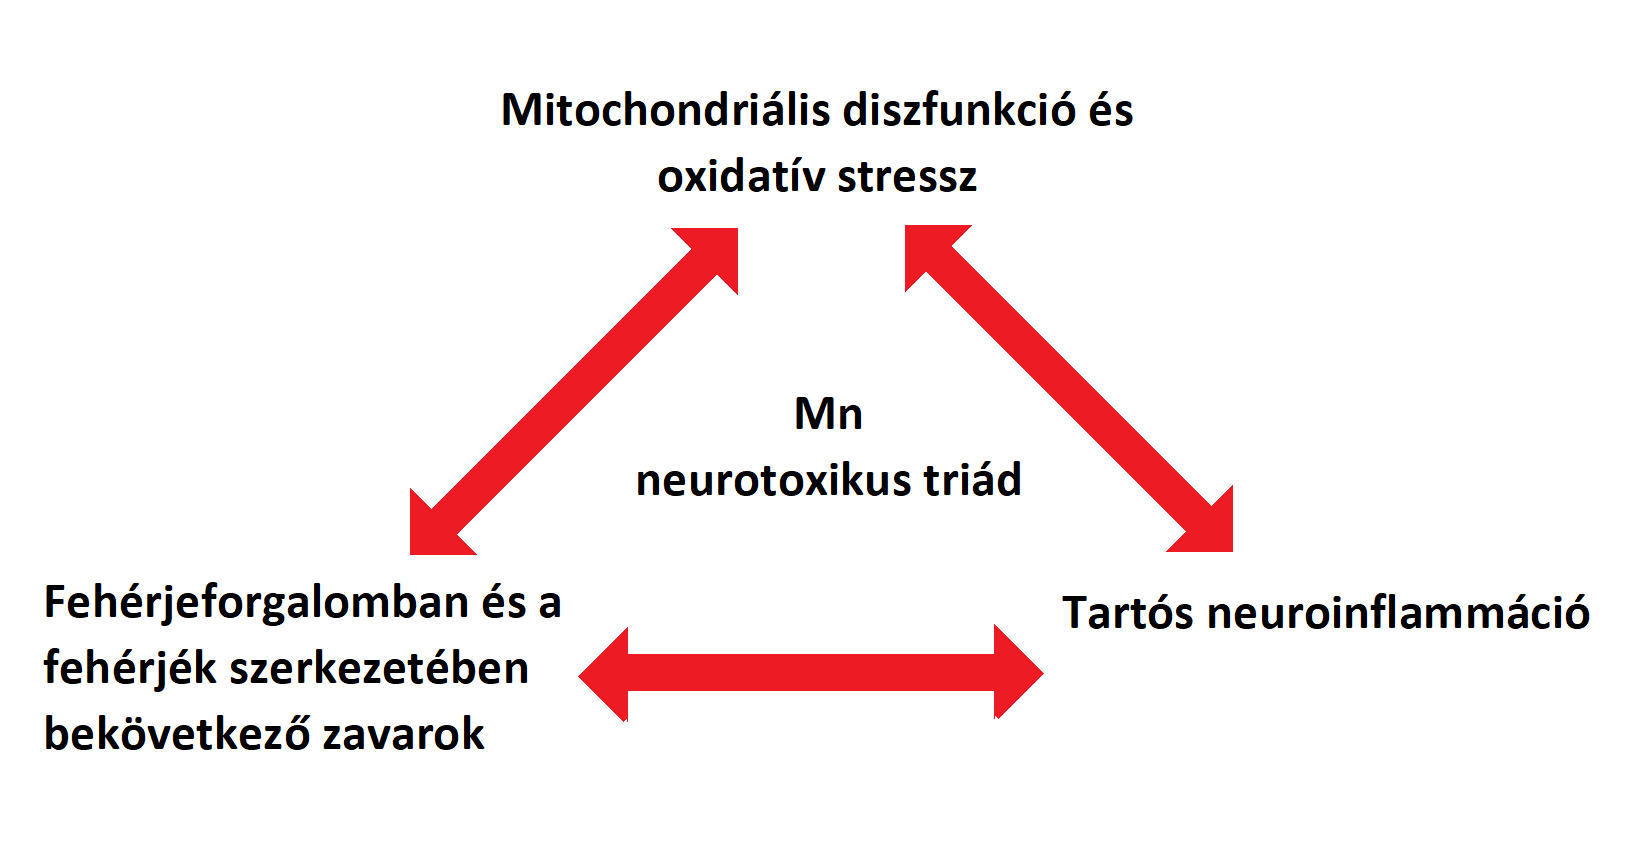 Mn Mechanistic Neurotoxic Triad